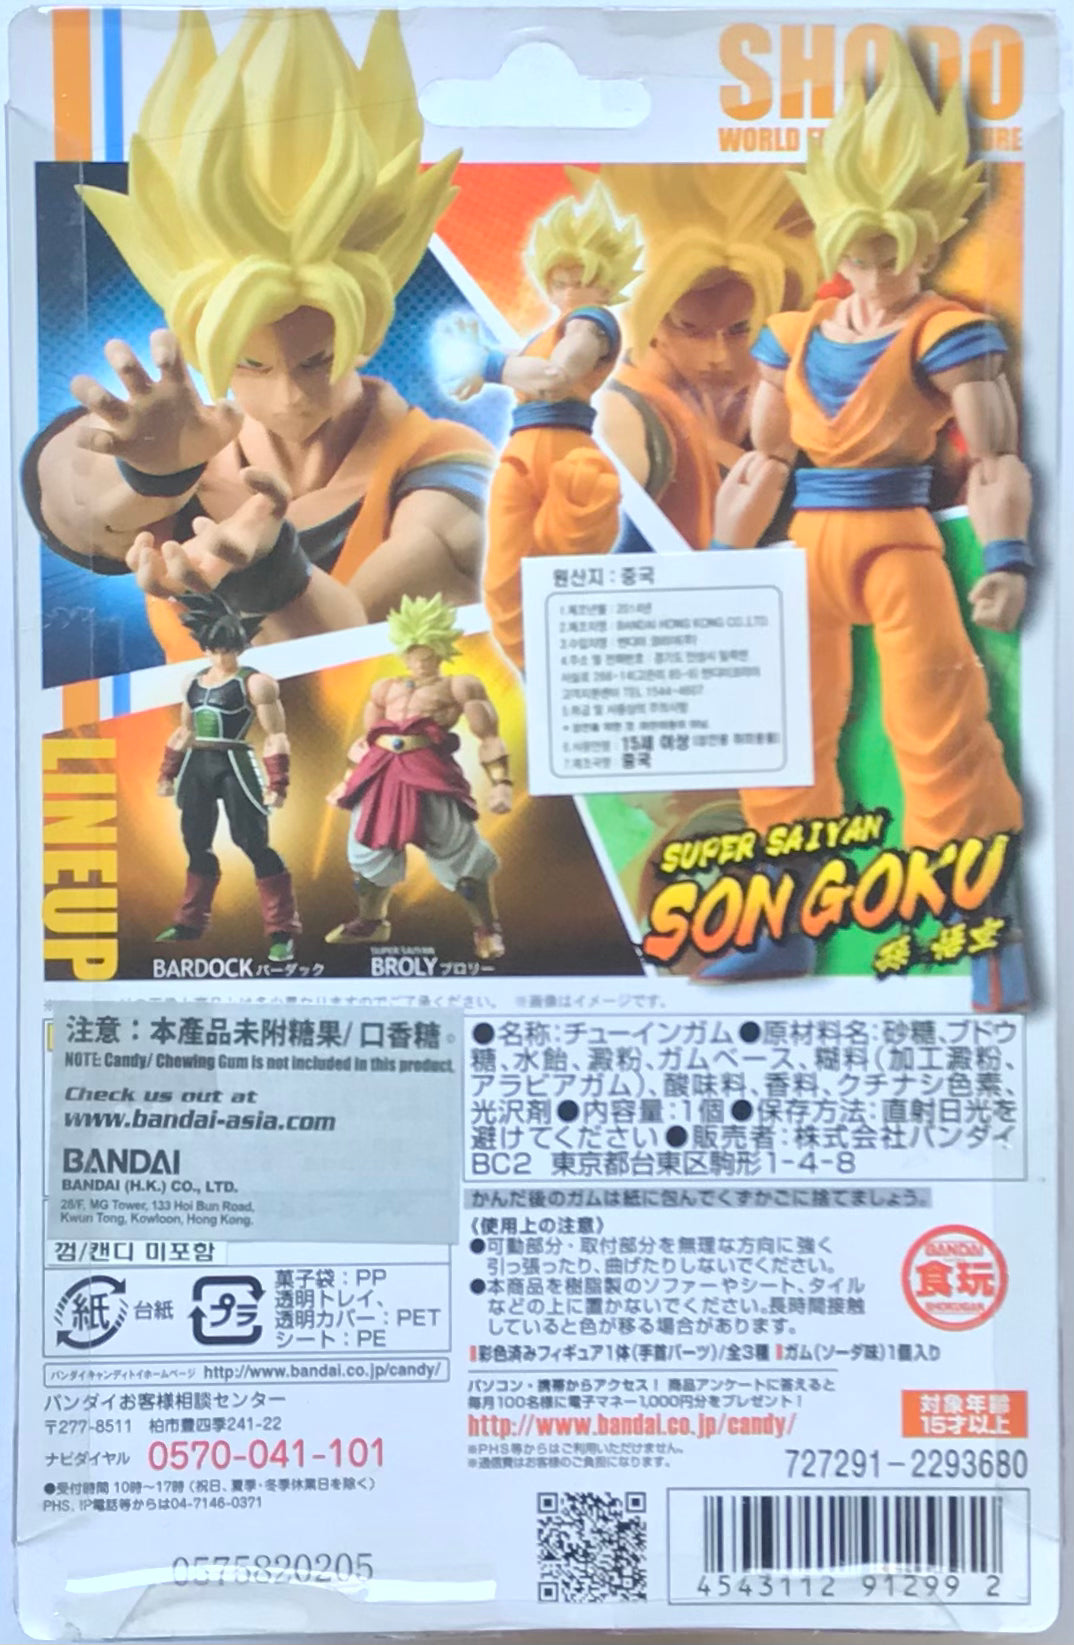 Dragon Ball Z - Son Goku Super Saiyan Blue | Photographic Print